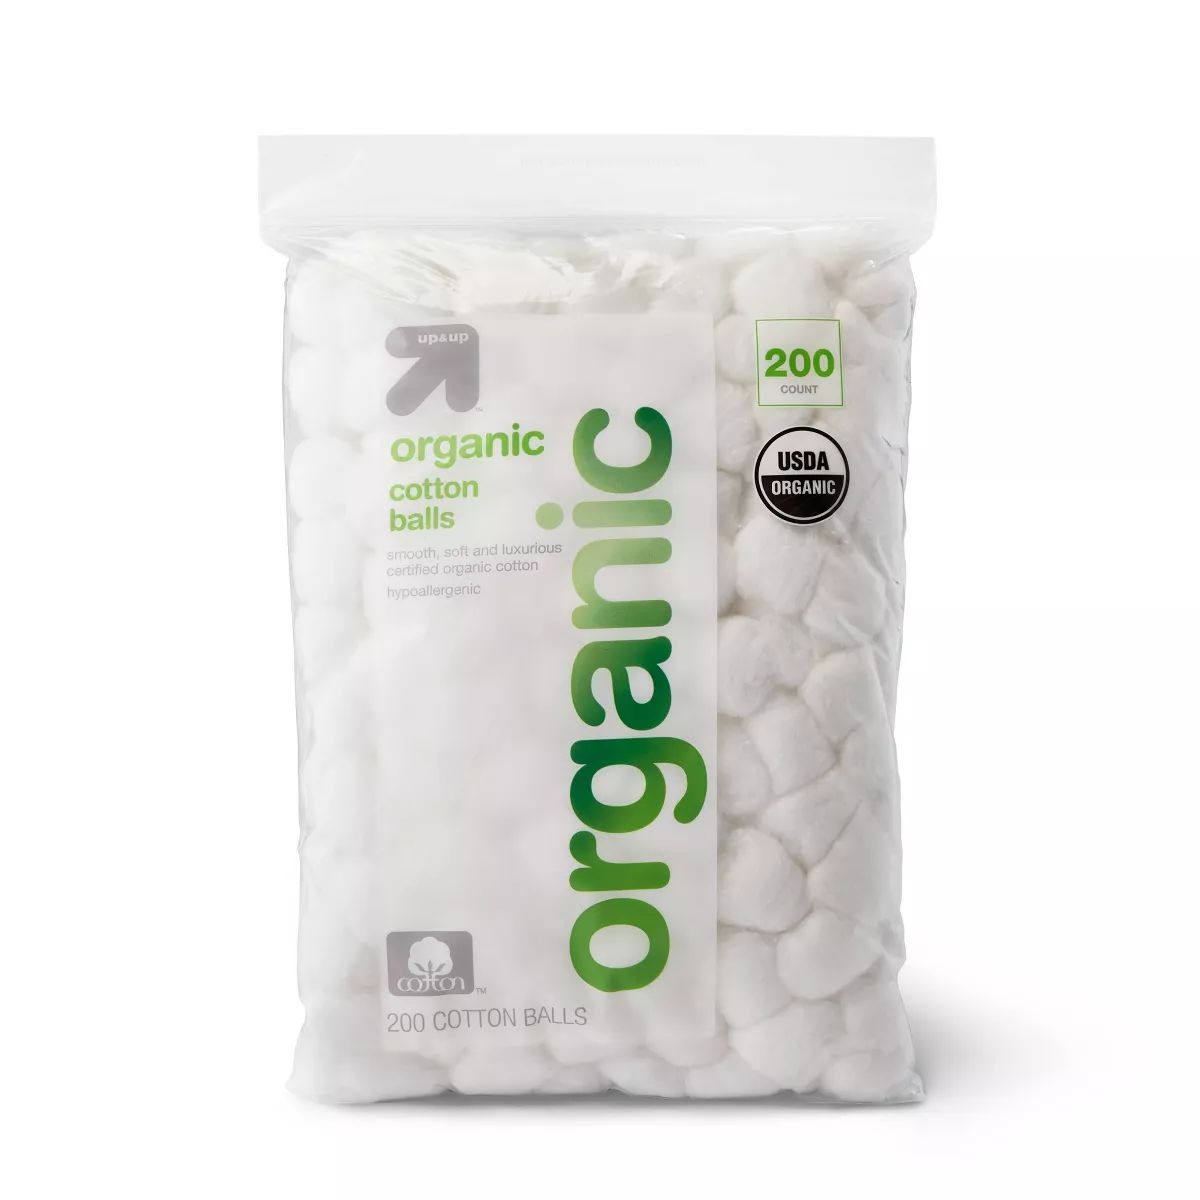 Organic Cotton Balls - 200ct - up & up™ | Target